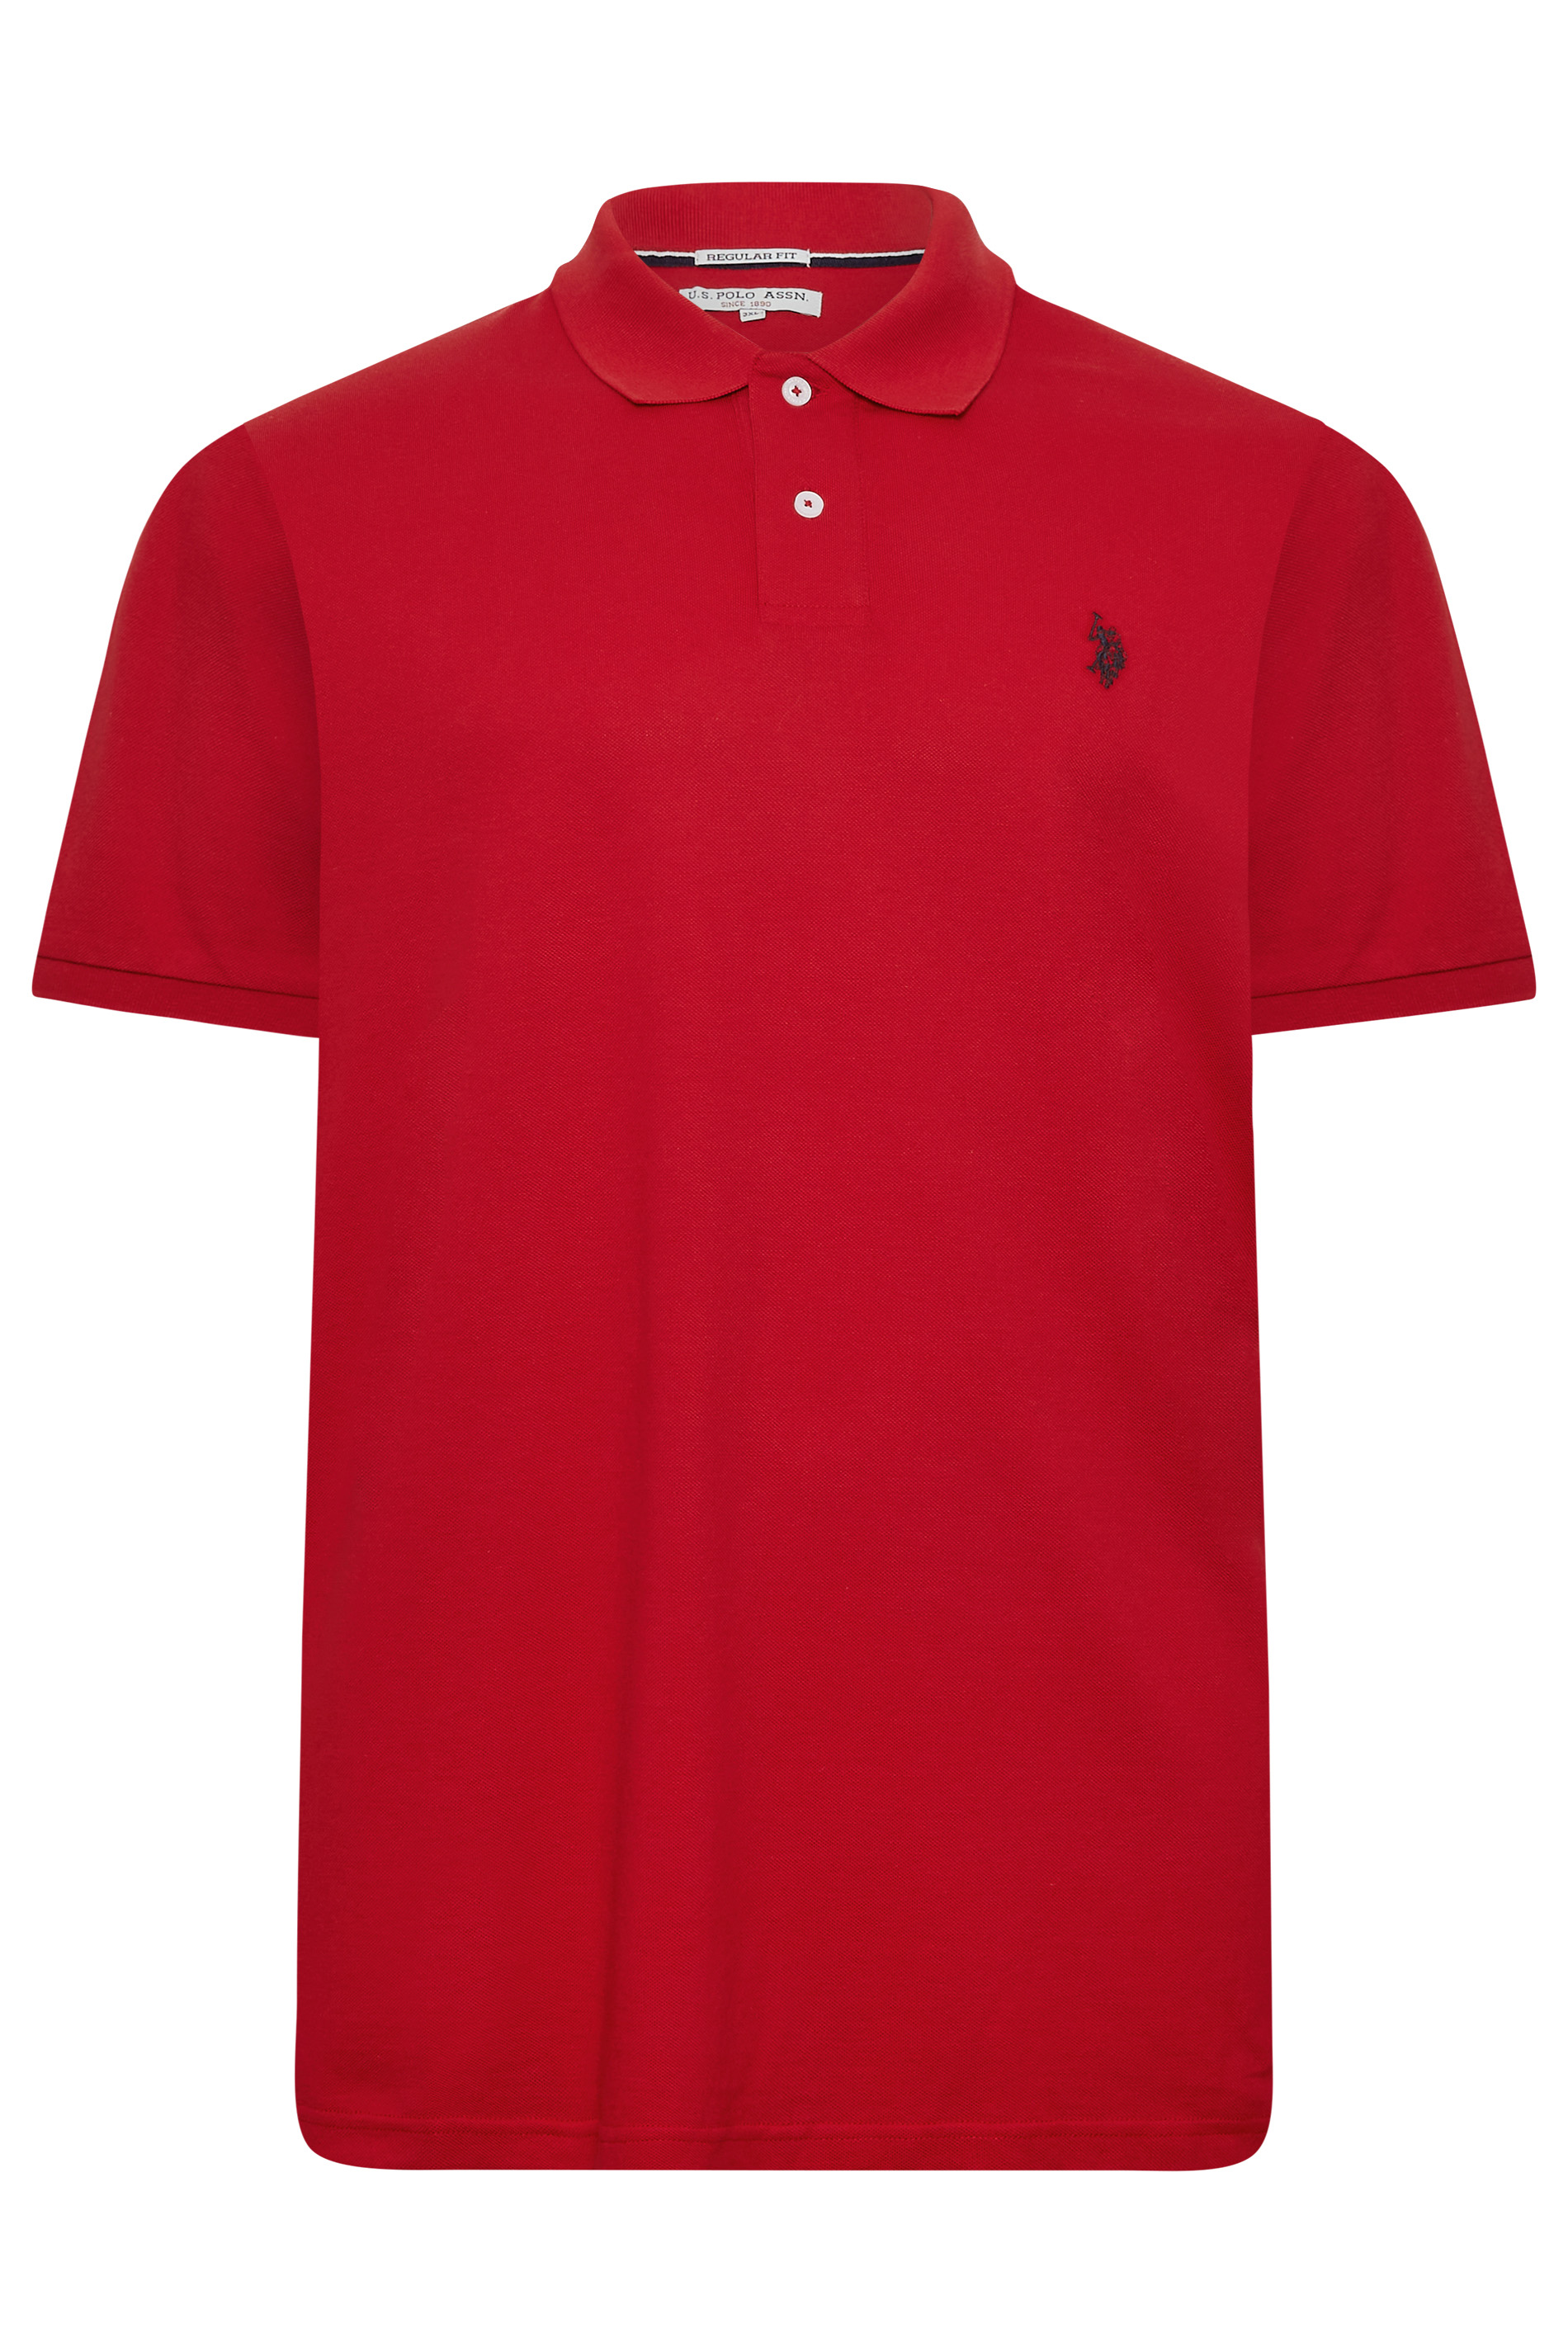 U.S. POLO ASSN. Big & Tall Red Polo Shirt | BadRhino  3